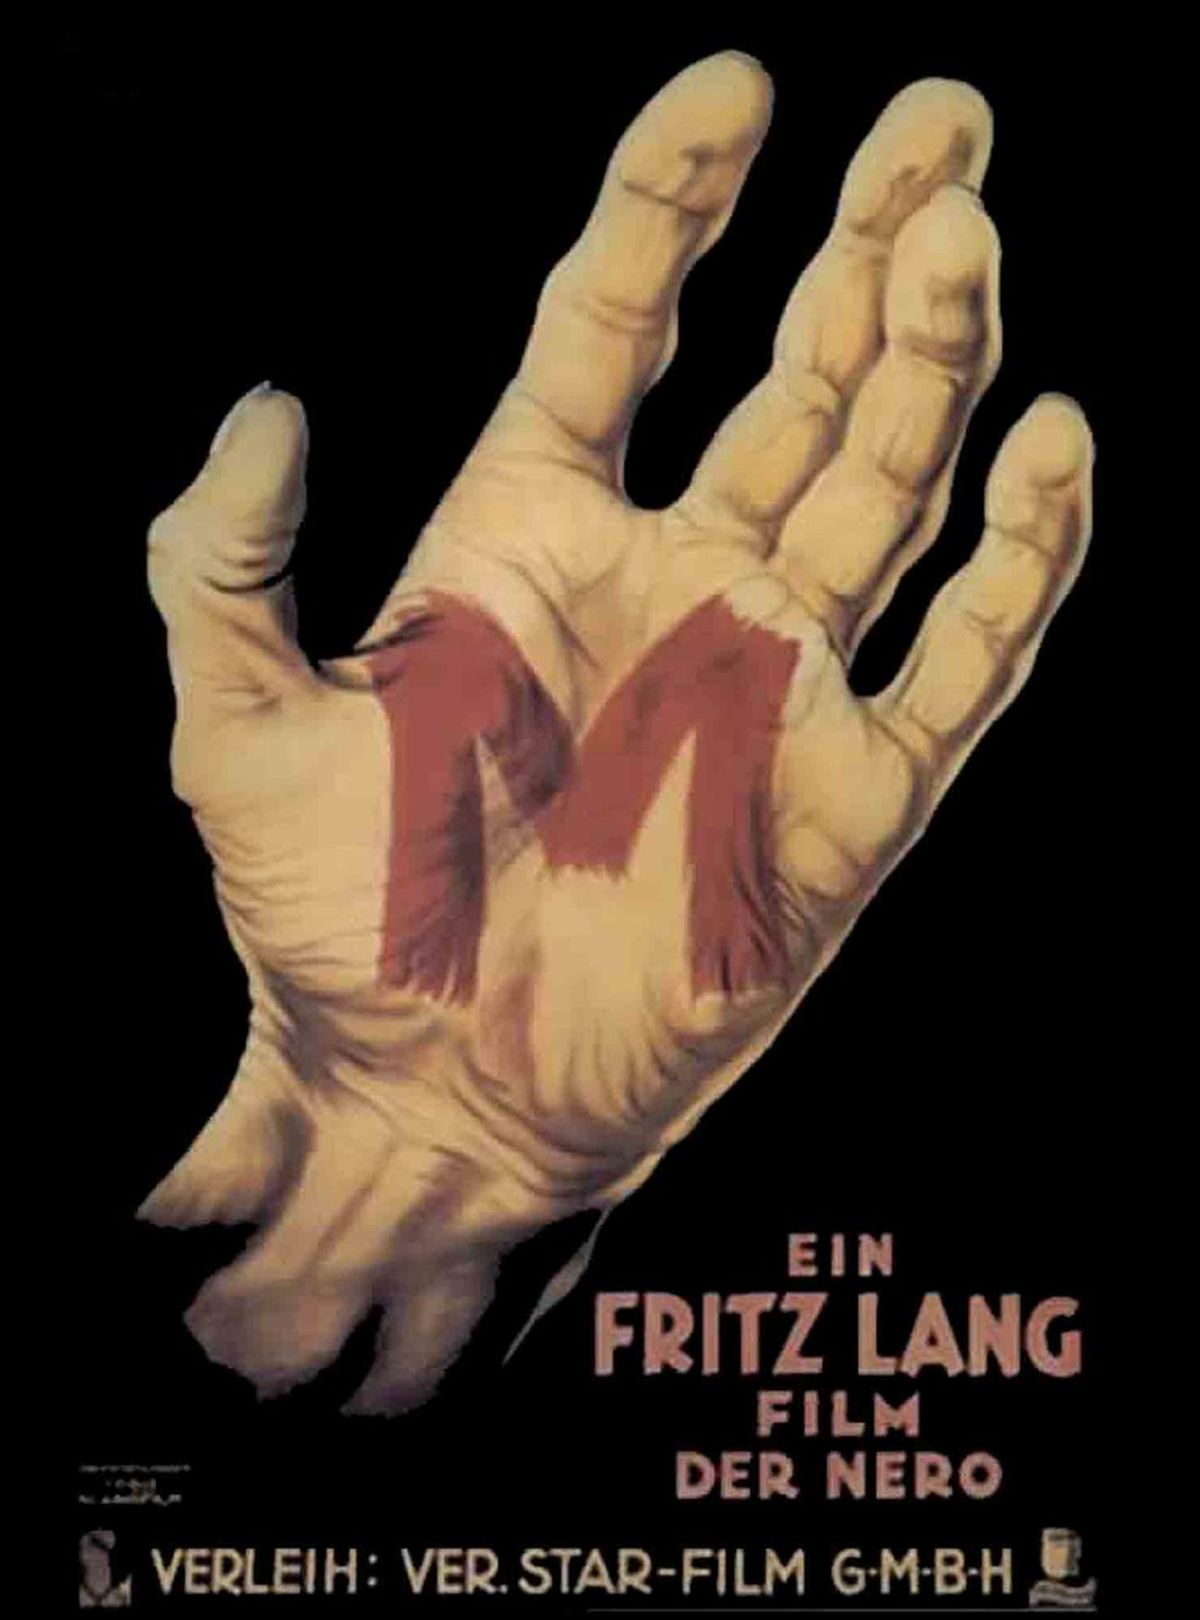 A Response To Fritz Lang's Film "M"